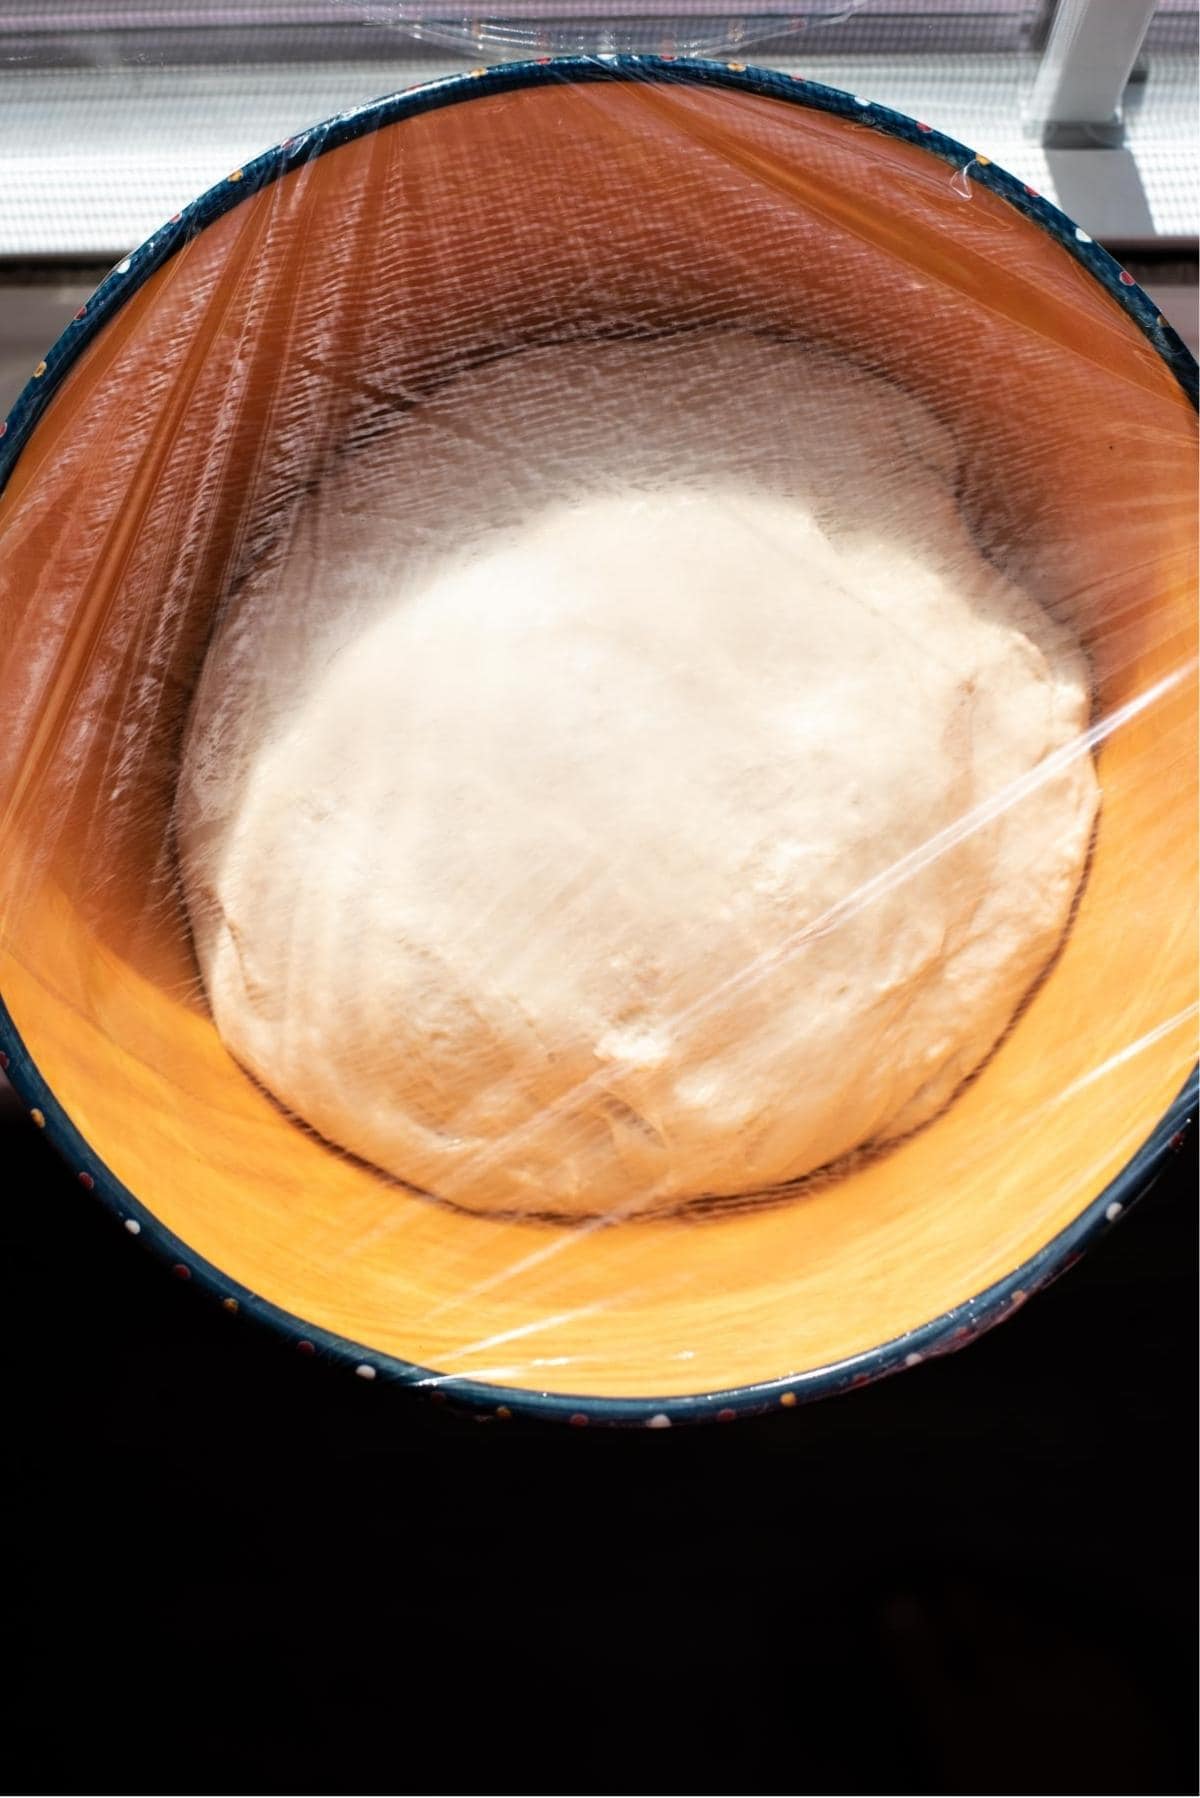 Risen focaccia dough in a orange mixing bowl.